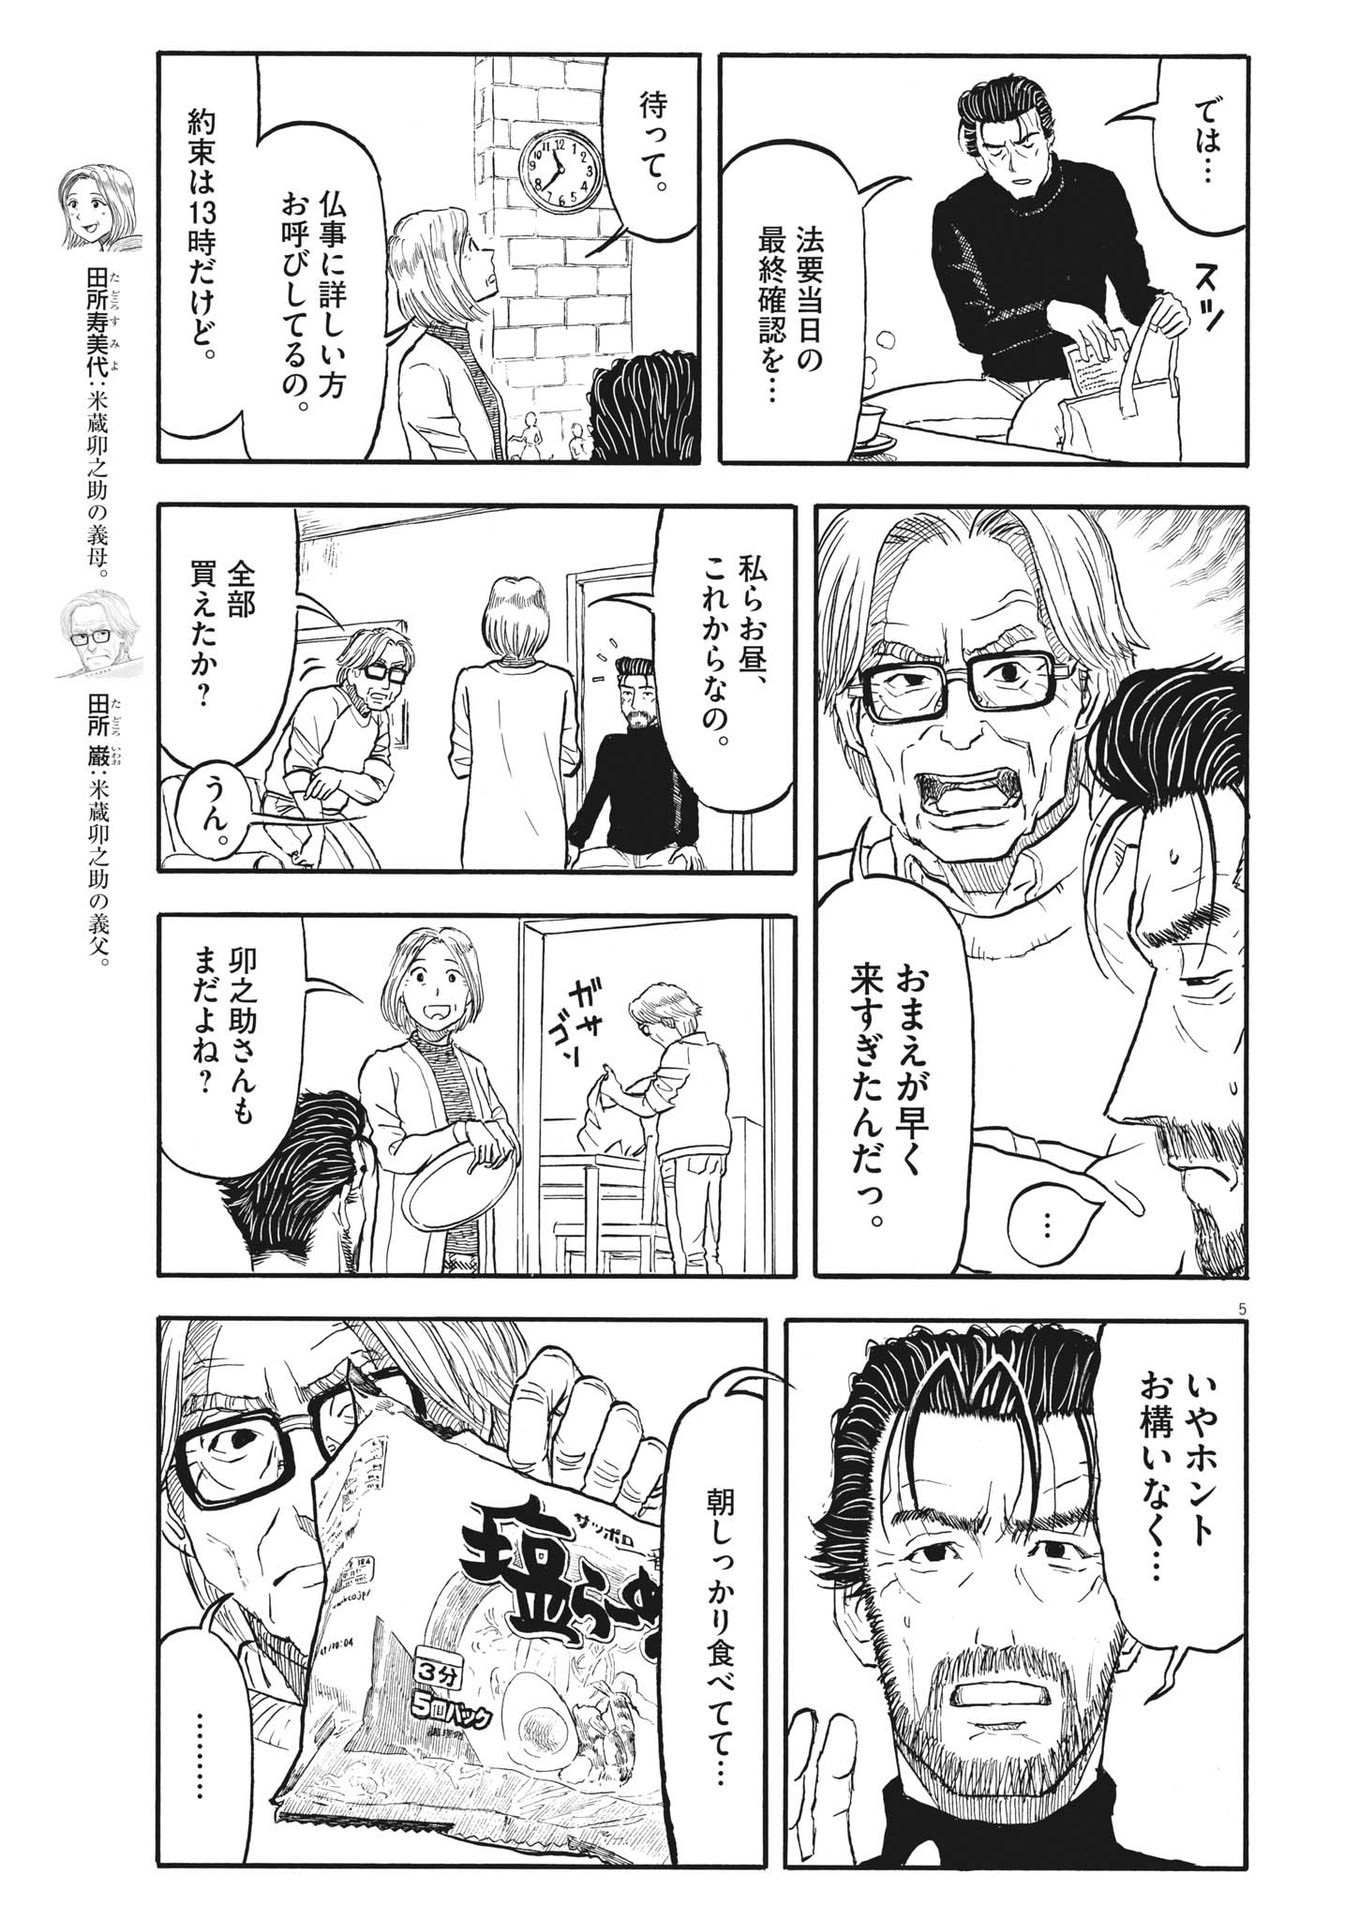 Komegura Fuufu no Recipe-chou - Chapter 26 - Page 5